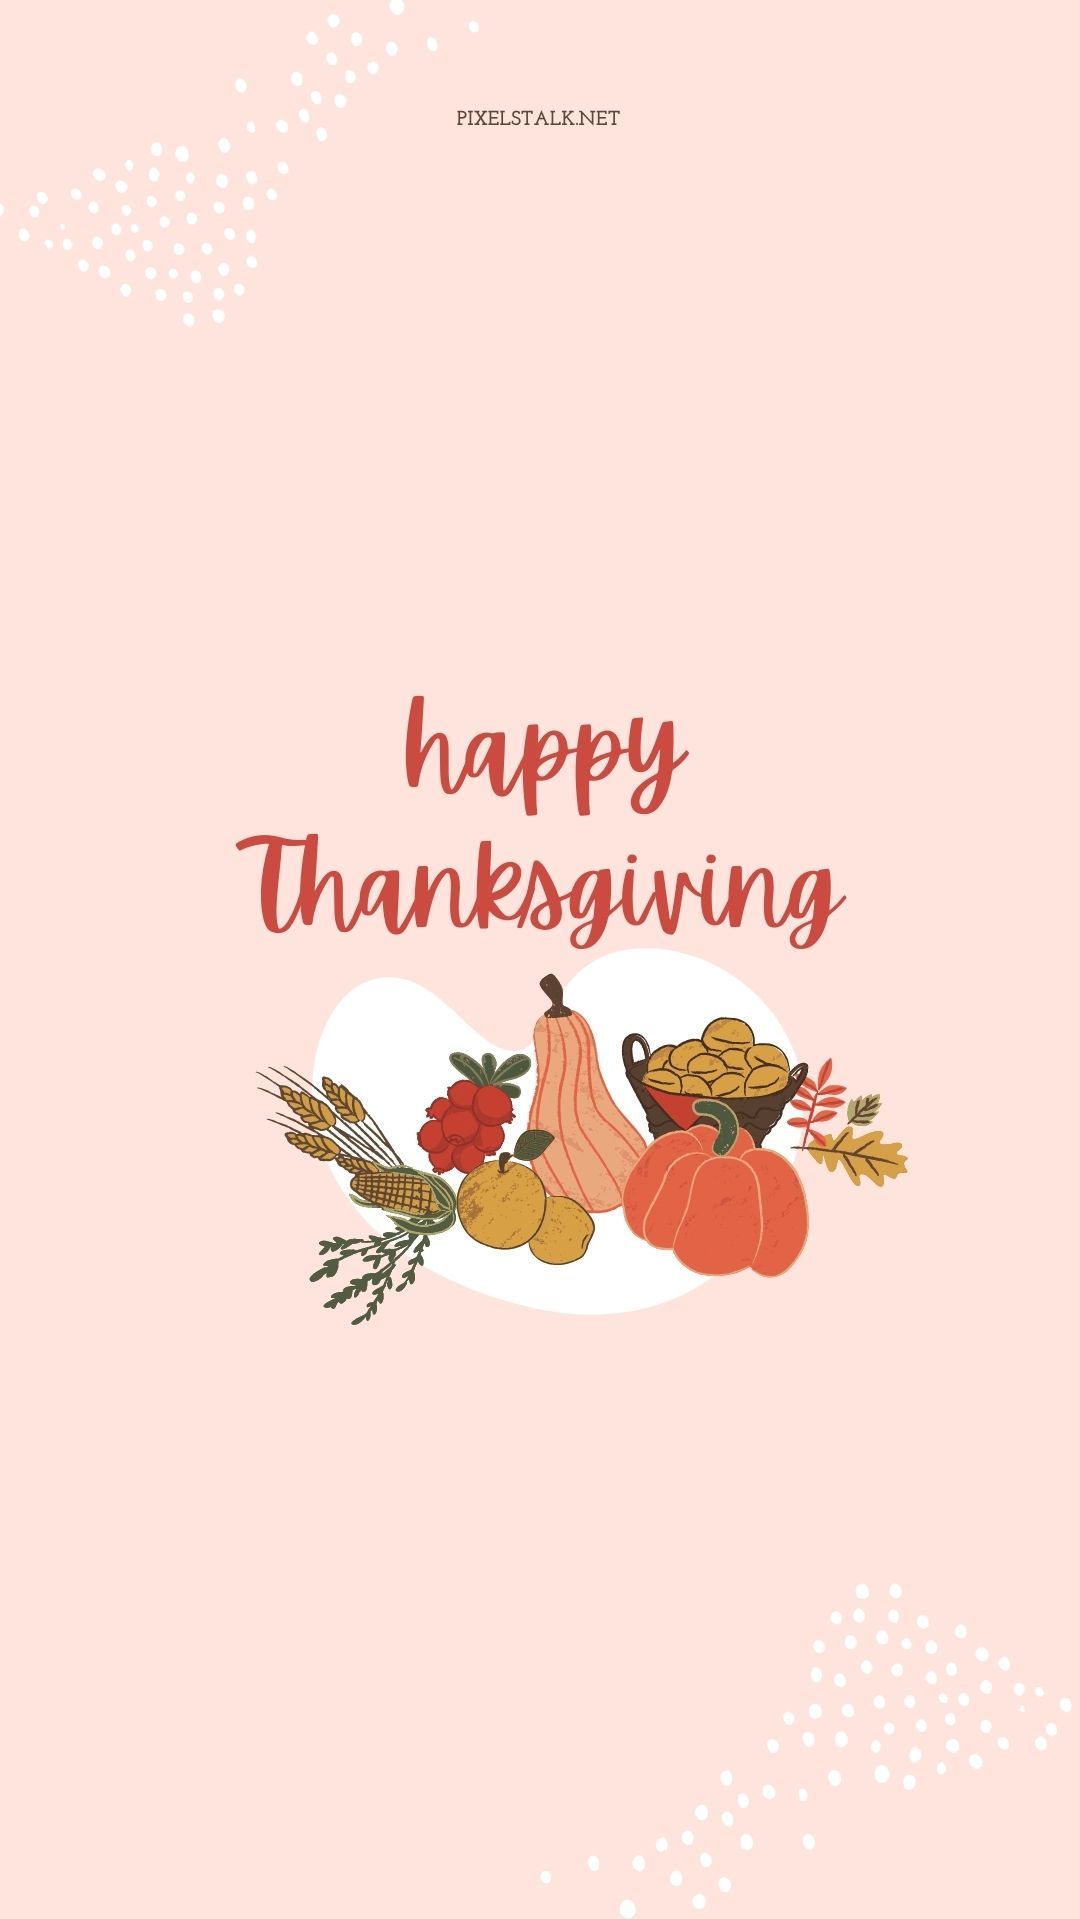 Happy thanksgiving 2018 - Thanksgiving